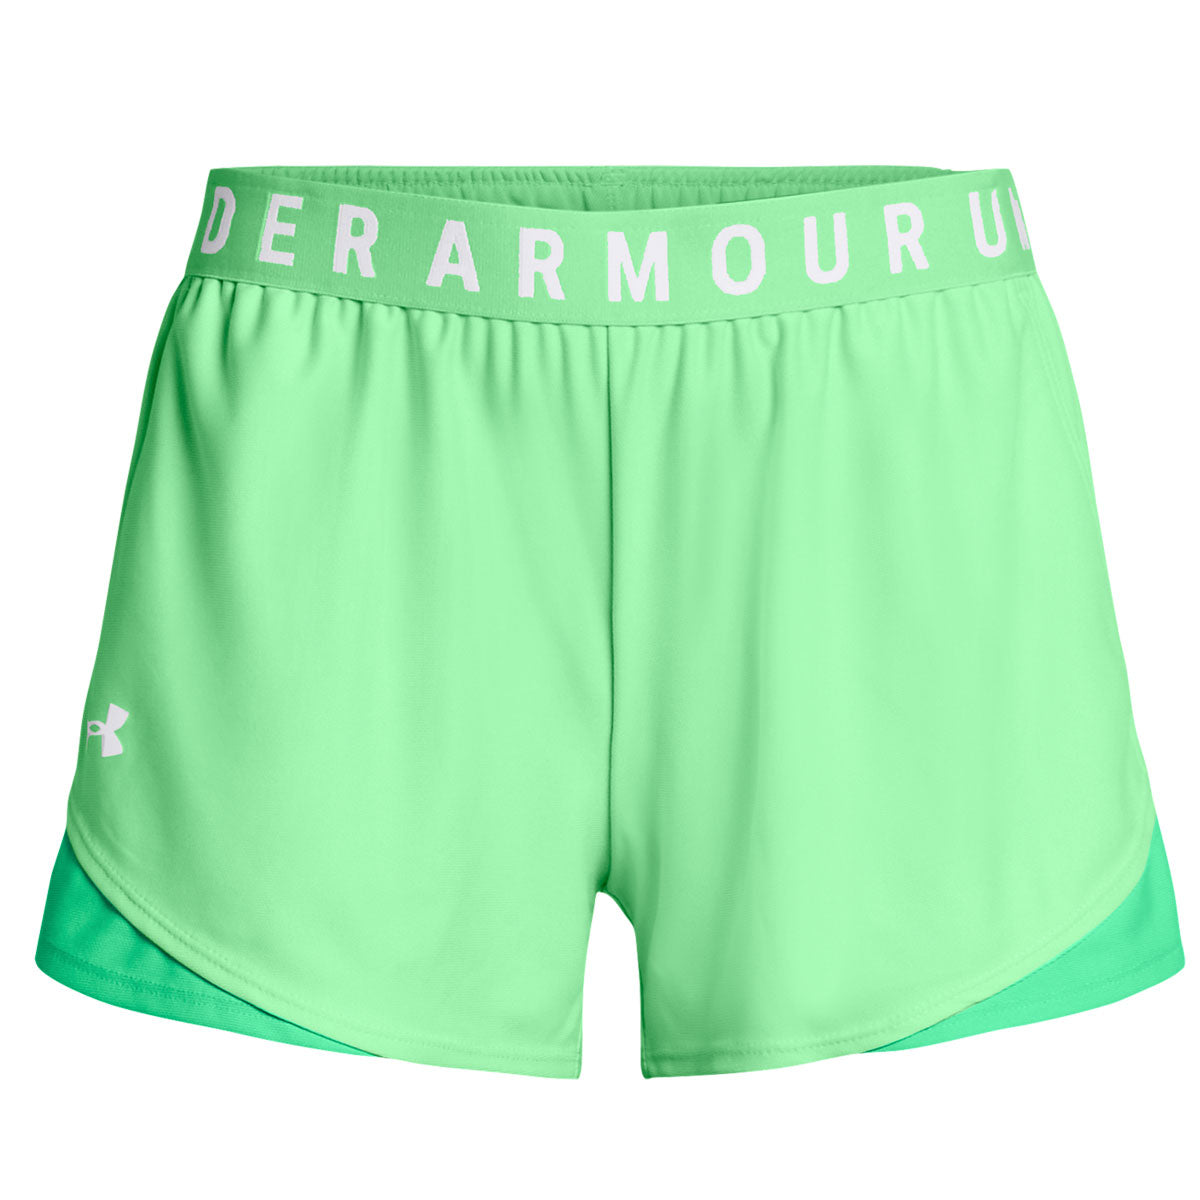 Under Armour Play Up 3.0 Shorts - Womens - Matrix Green/Vapor Green/White